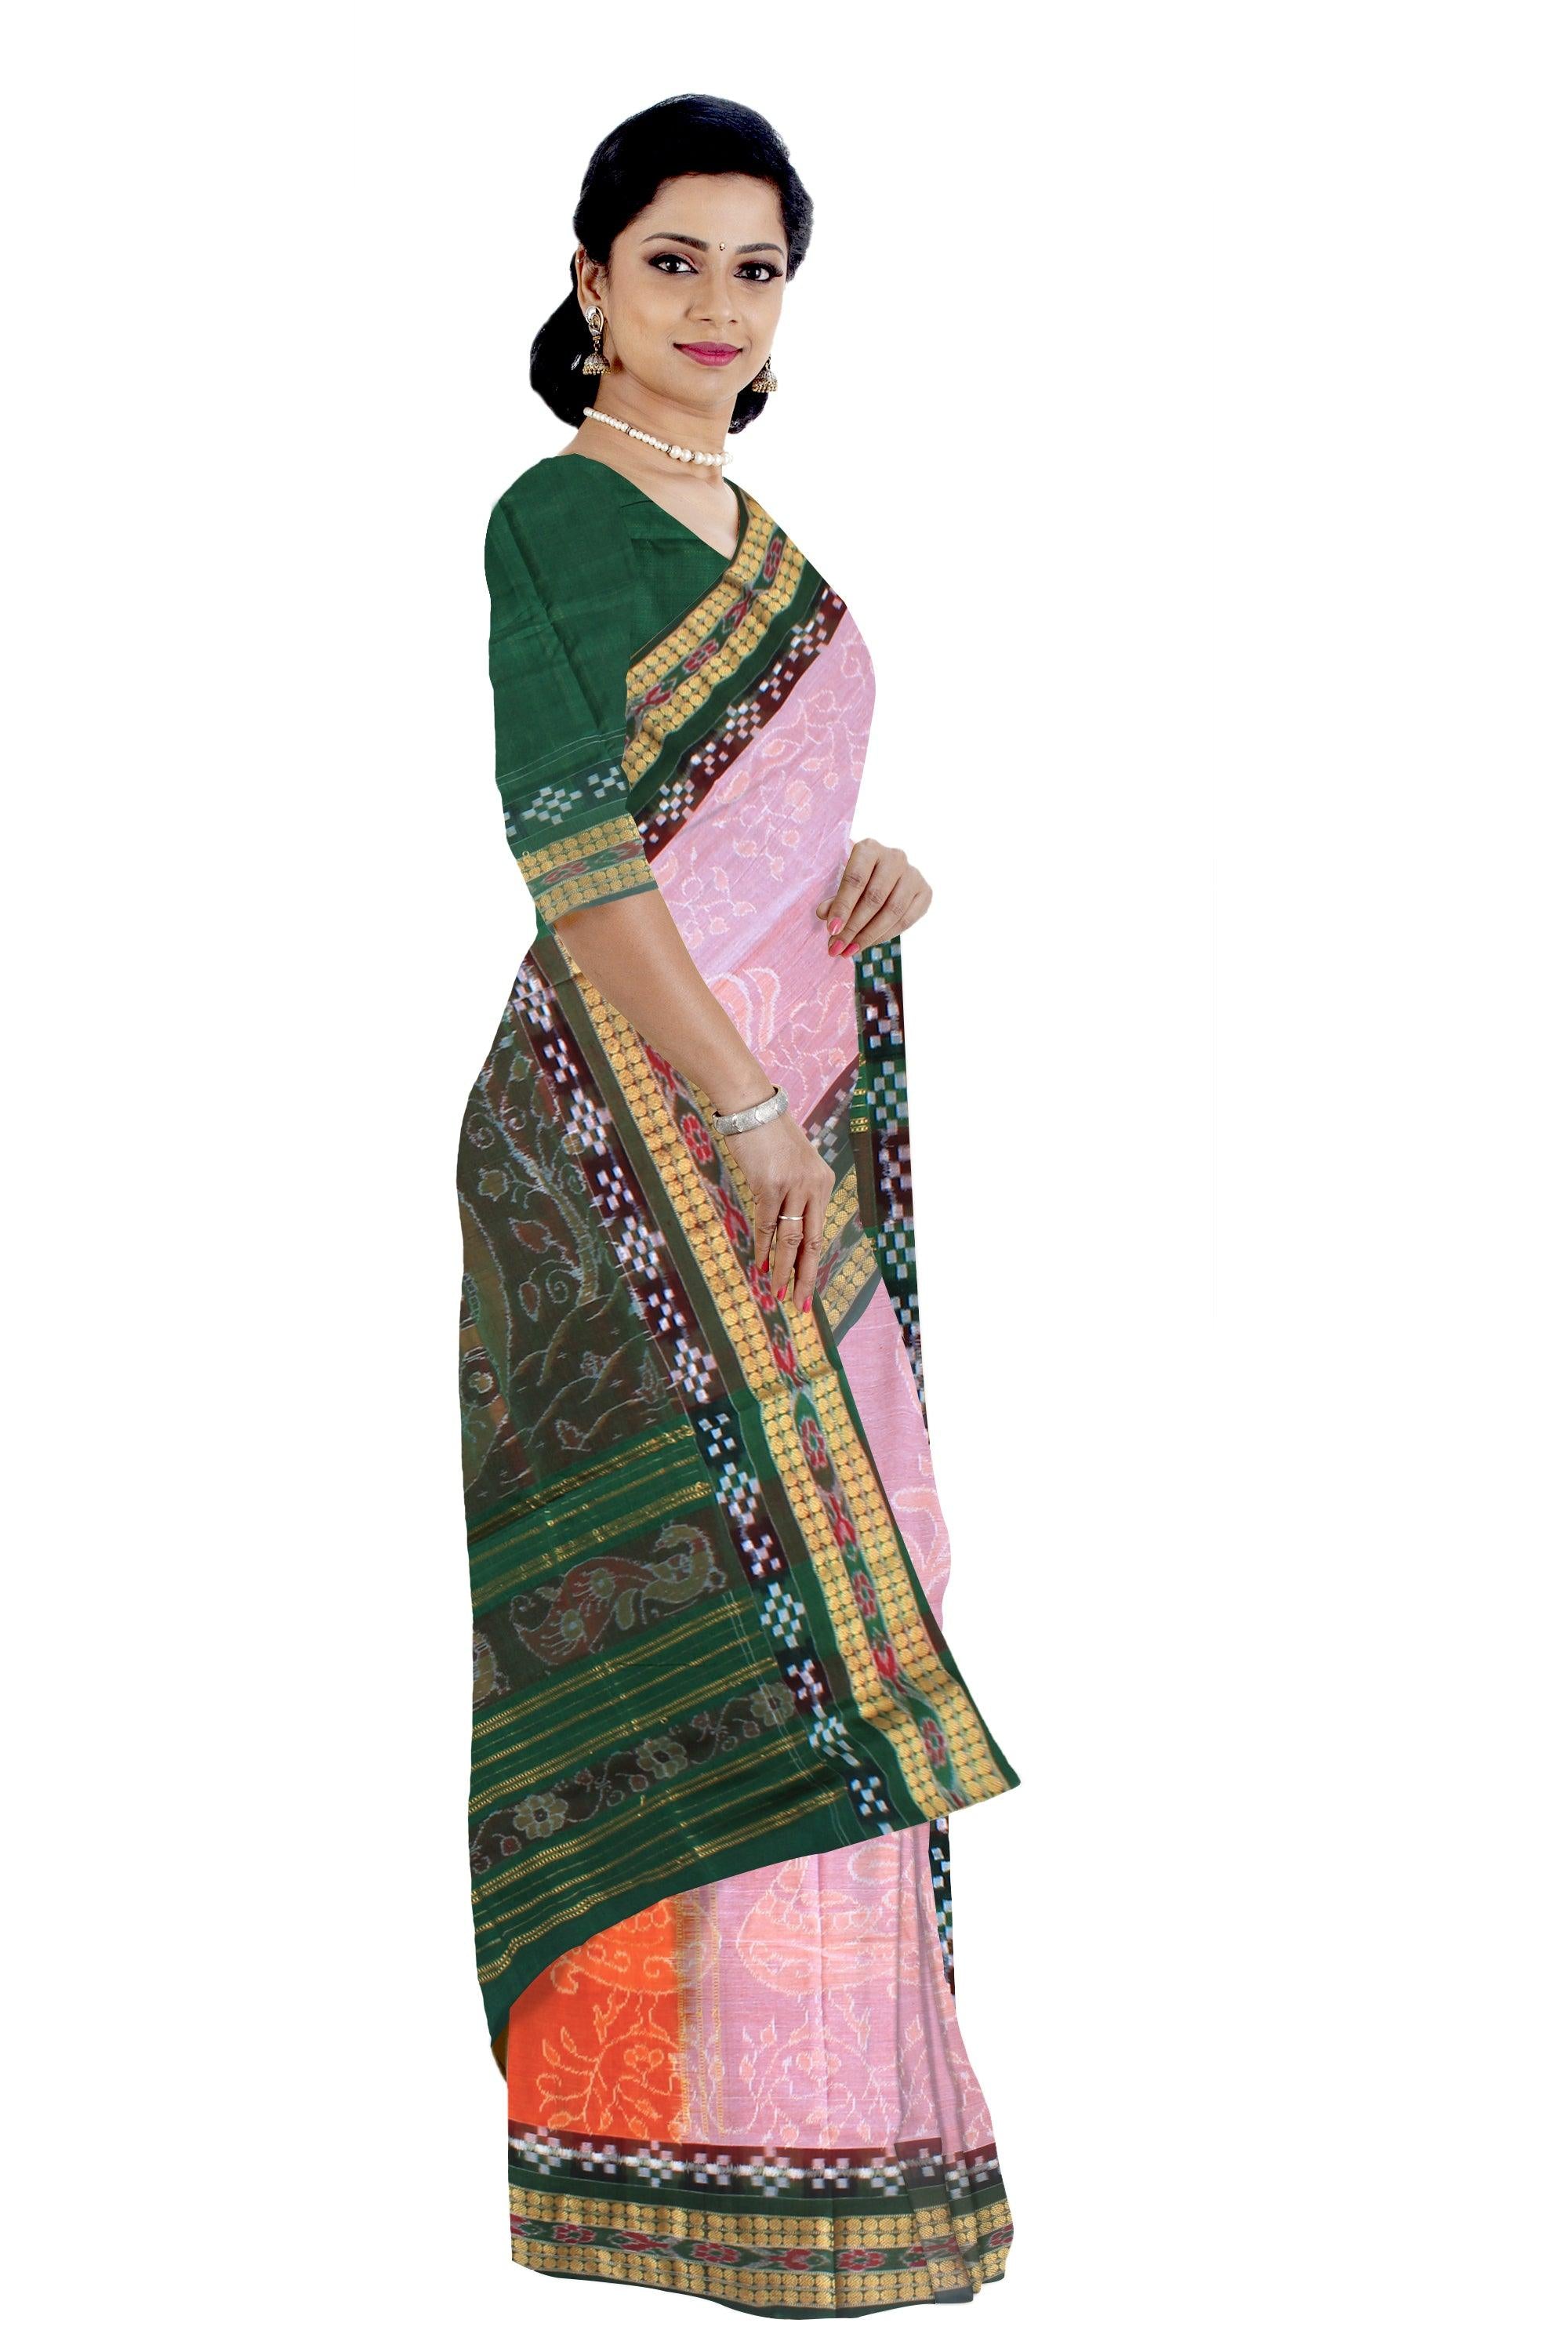 3D color of sambalpuri pure cotton saree , available with blouse piece - Koshali Arts & Crafts Enterprise